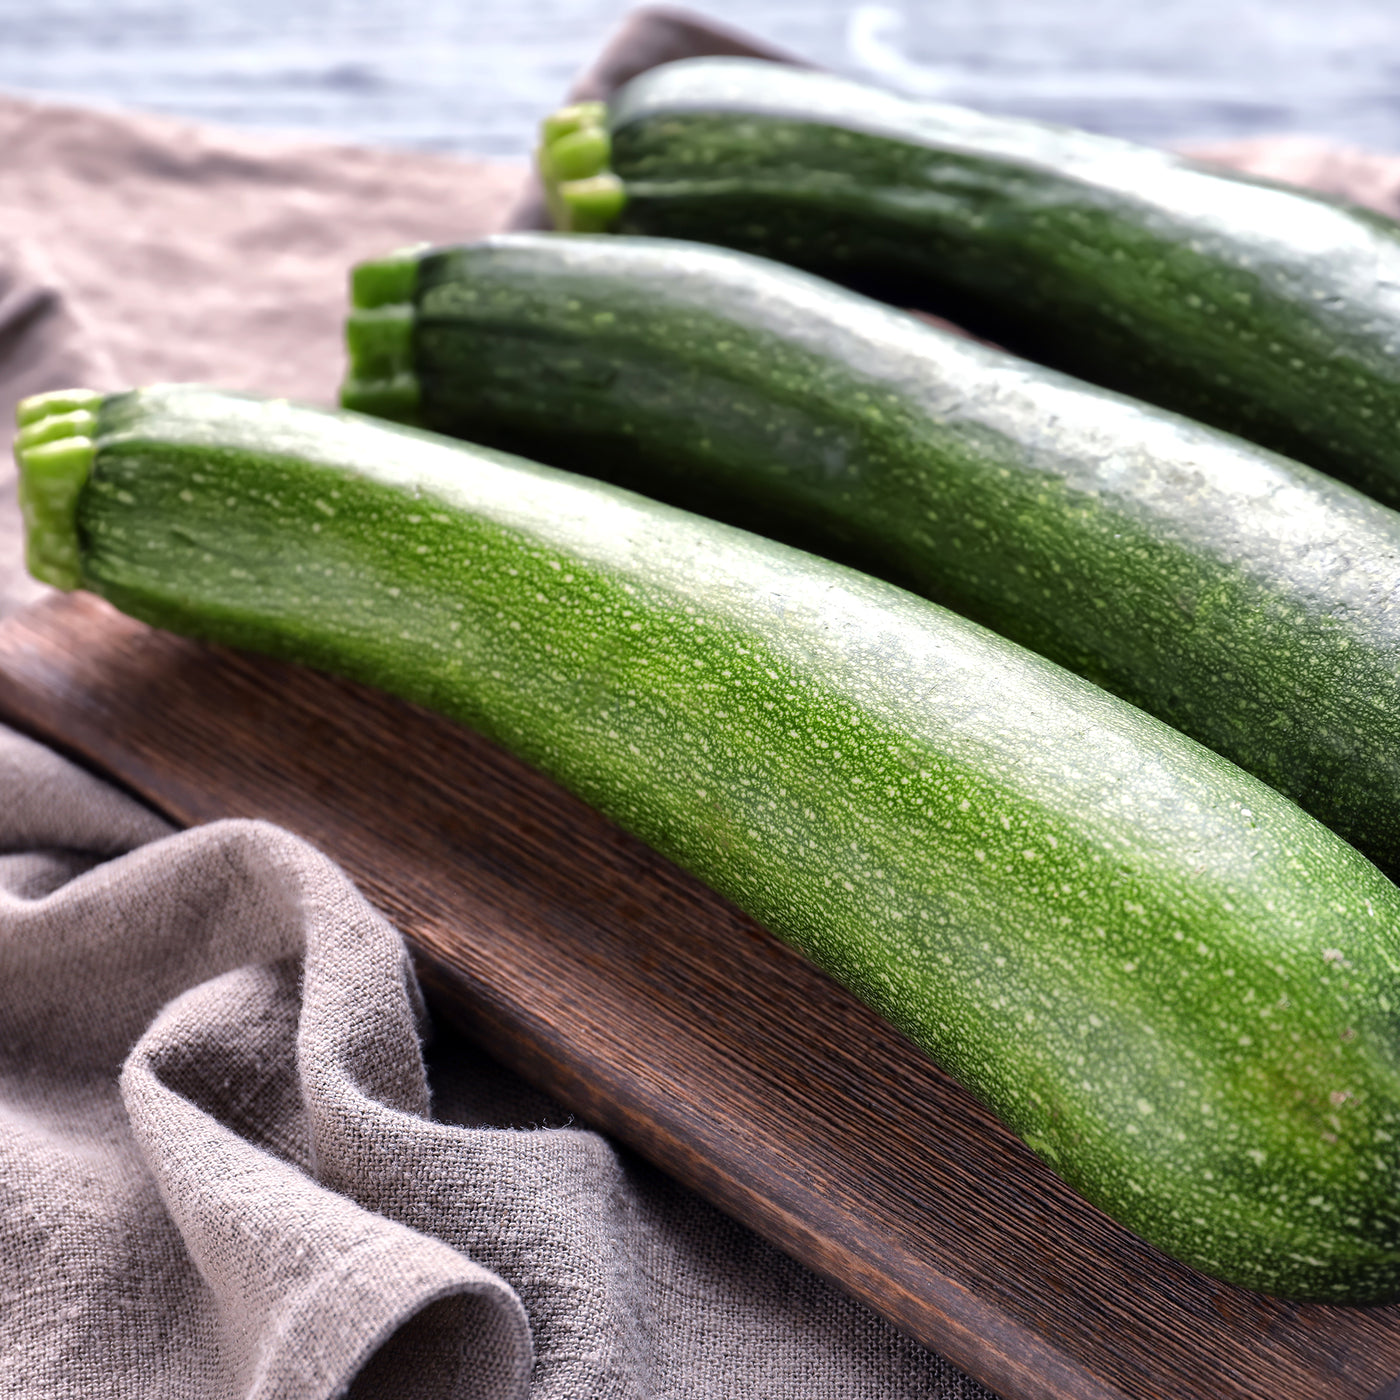 Seasonal Organic Zucchini